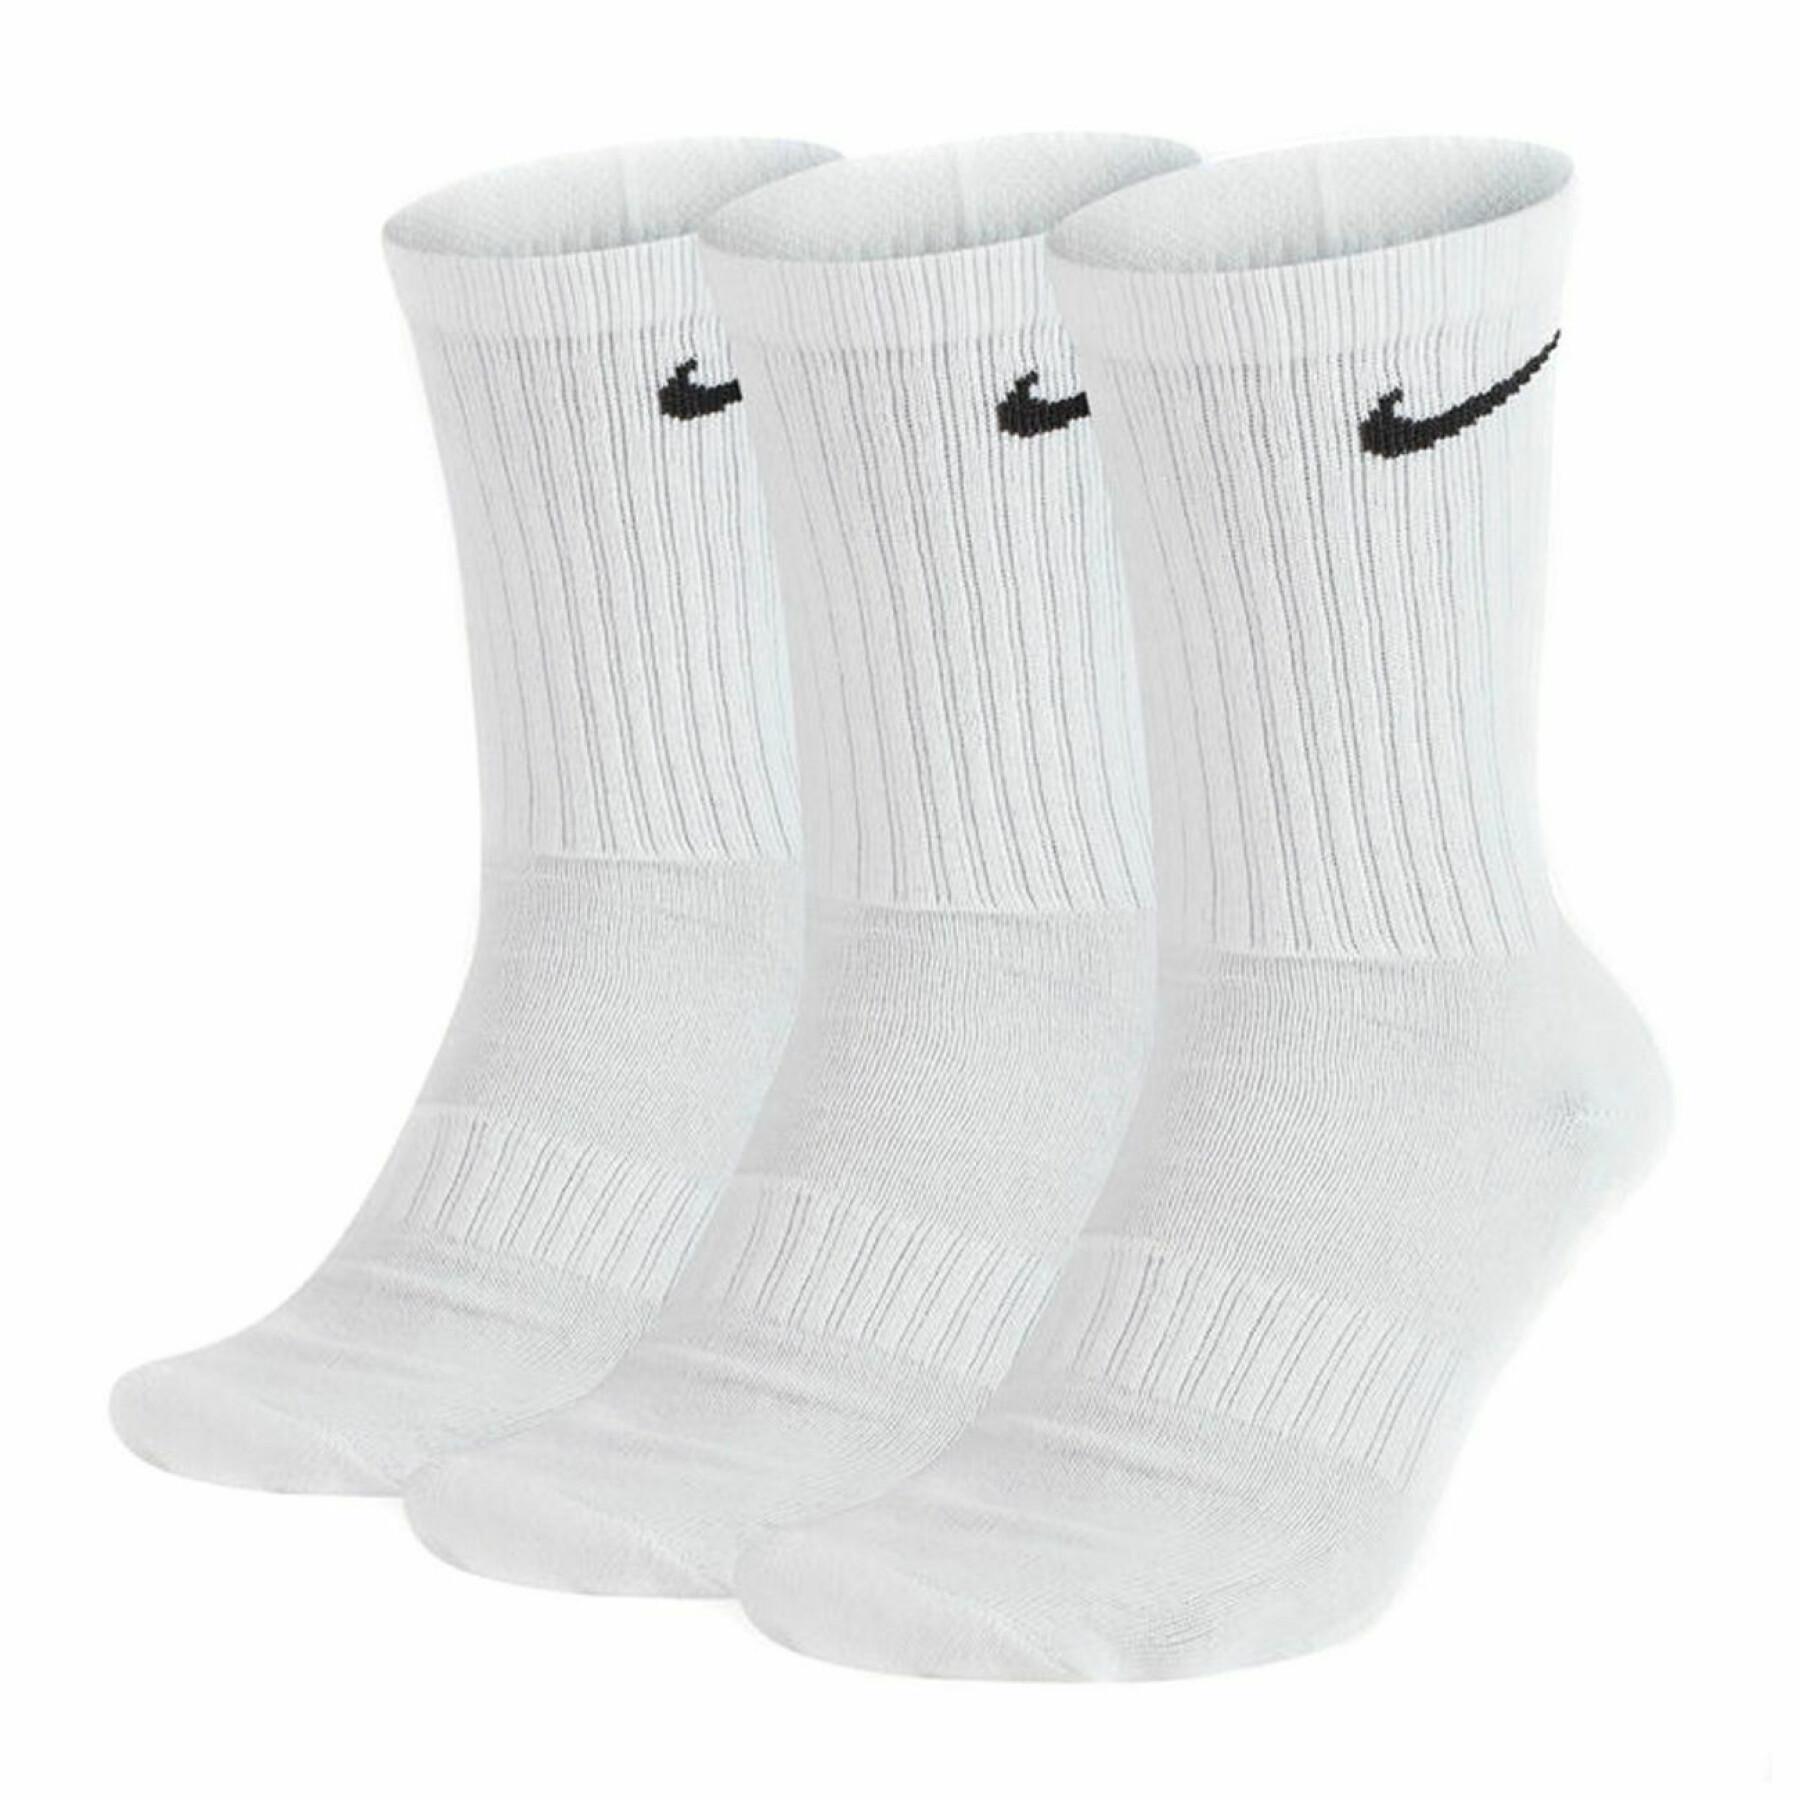 Socks Nike everyday cushioned